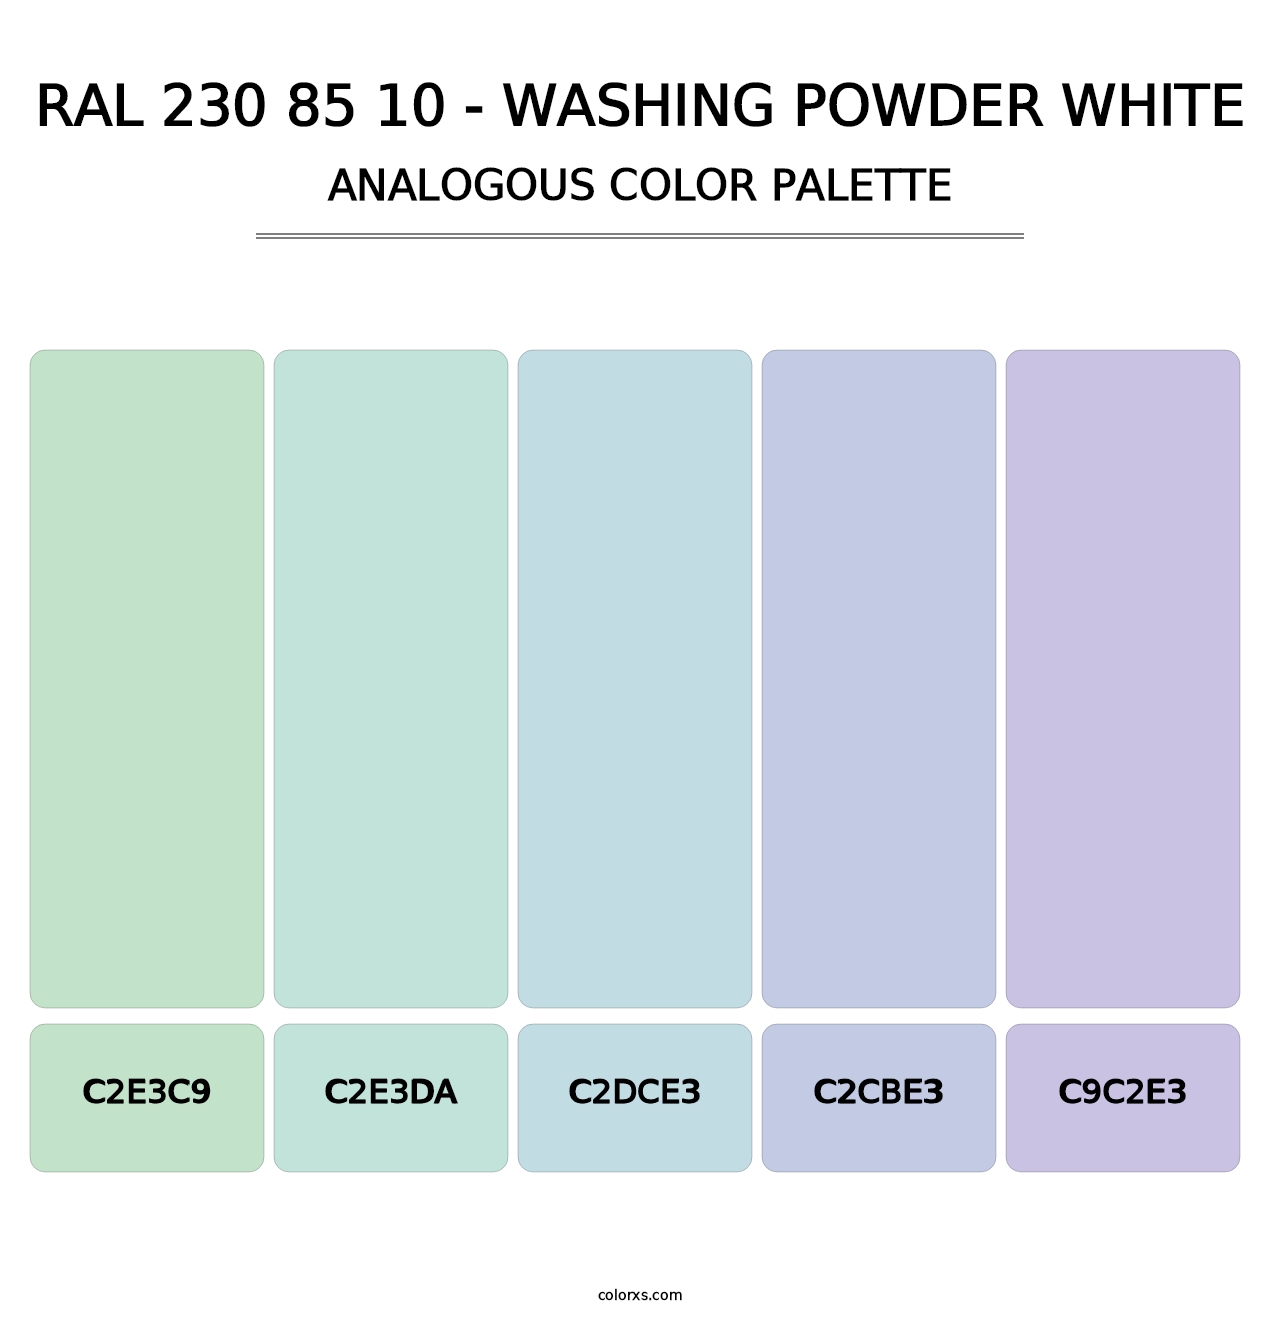 RAL 230 85 10 - Washing Powder White - Analogous Color Palette